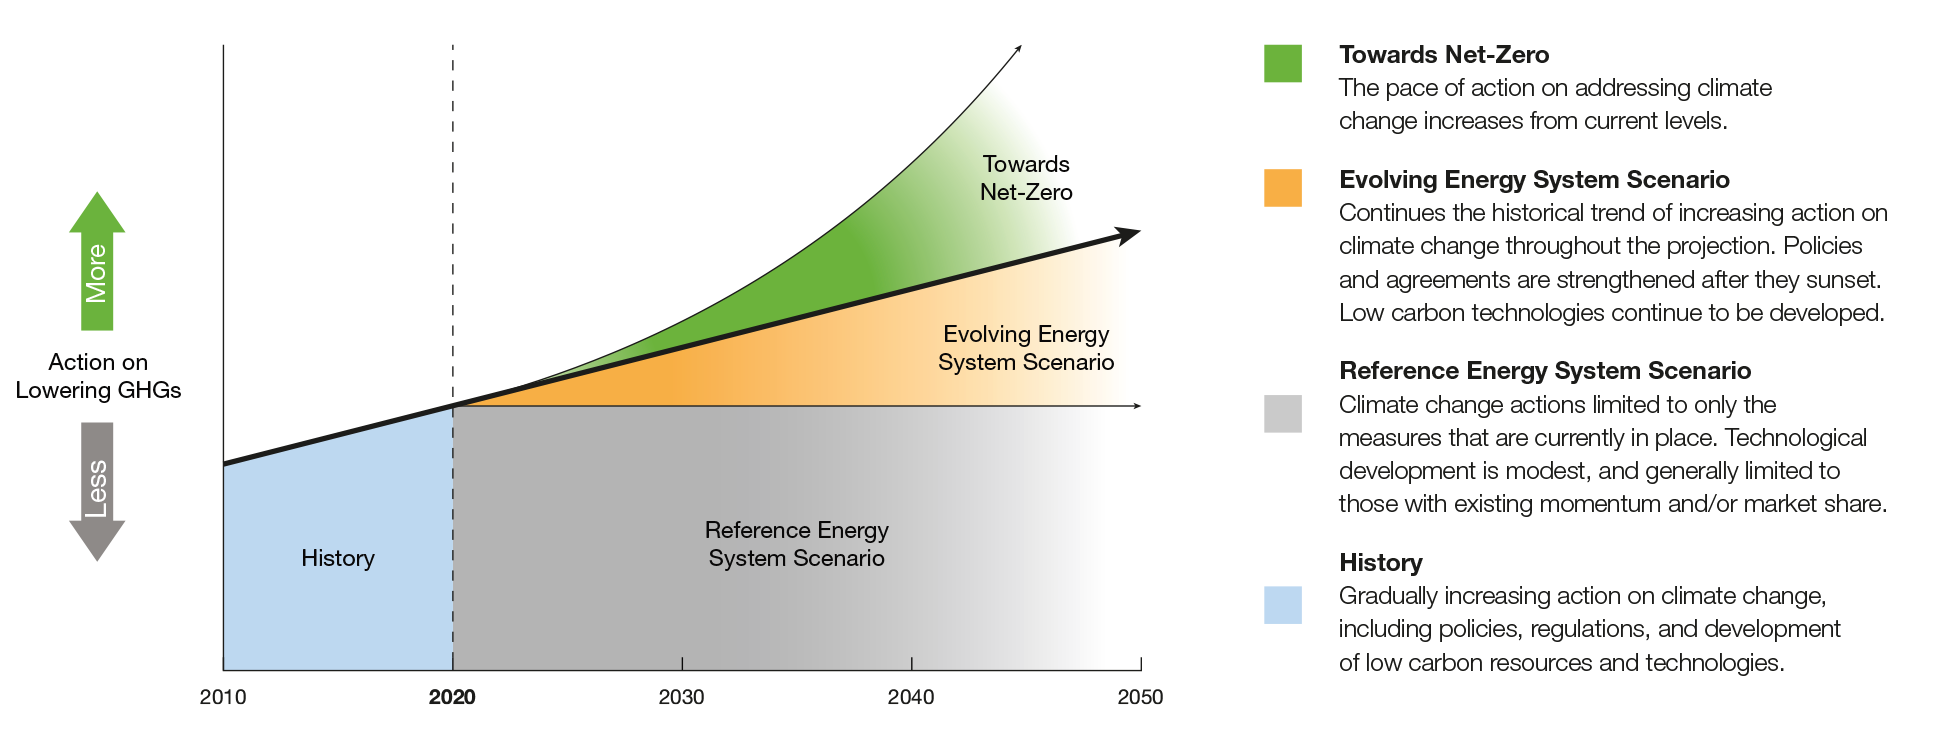 Figure A1 Conceptual Illustration of EF2020 Scenarios and a Net-Zero Future